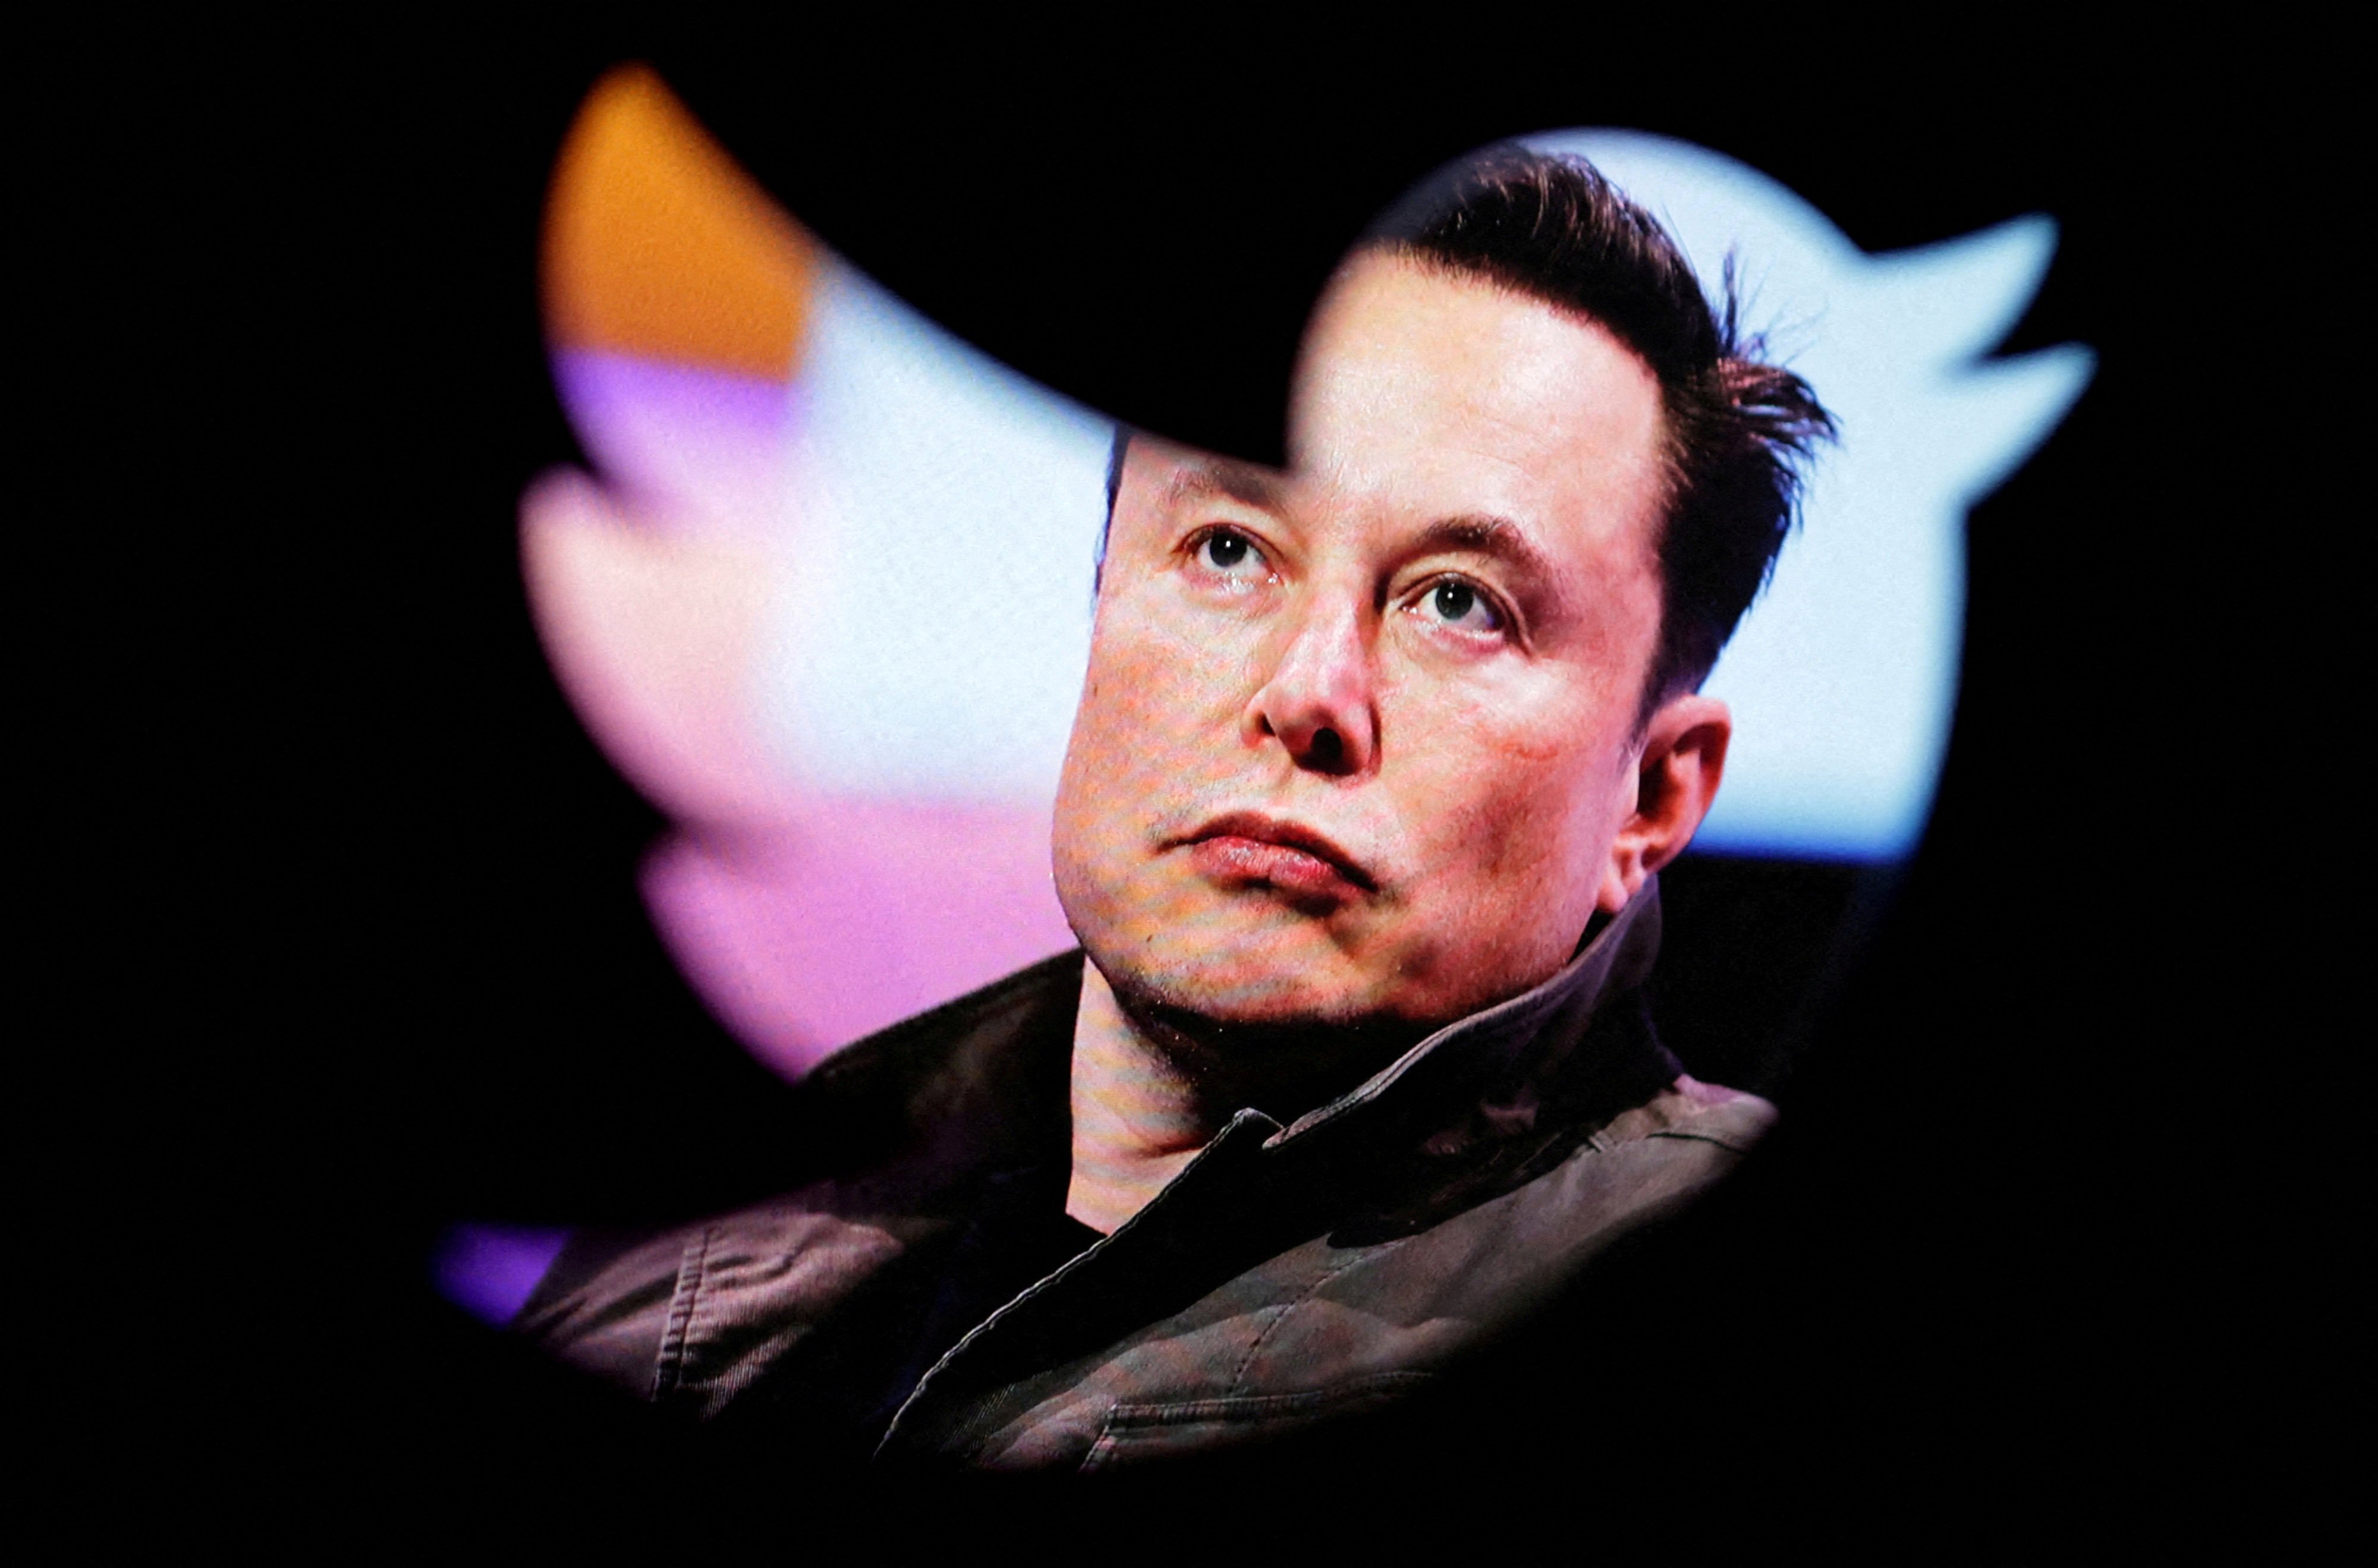 Elon Musk’s photo is seen through a Twitter logo. Photo: Reuters / Dado Ruvic / Illustration